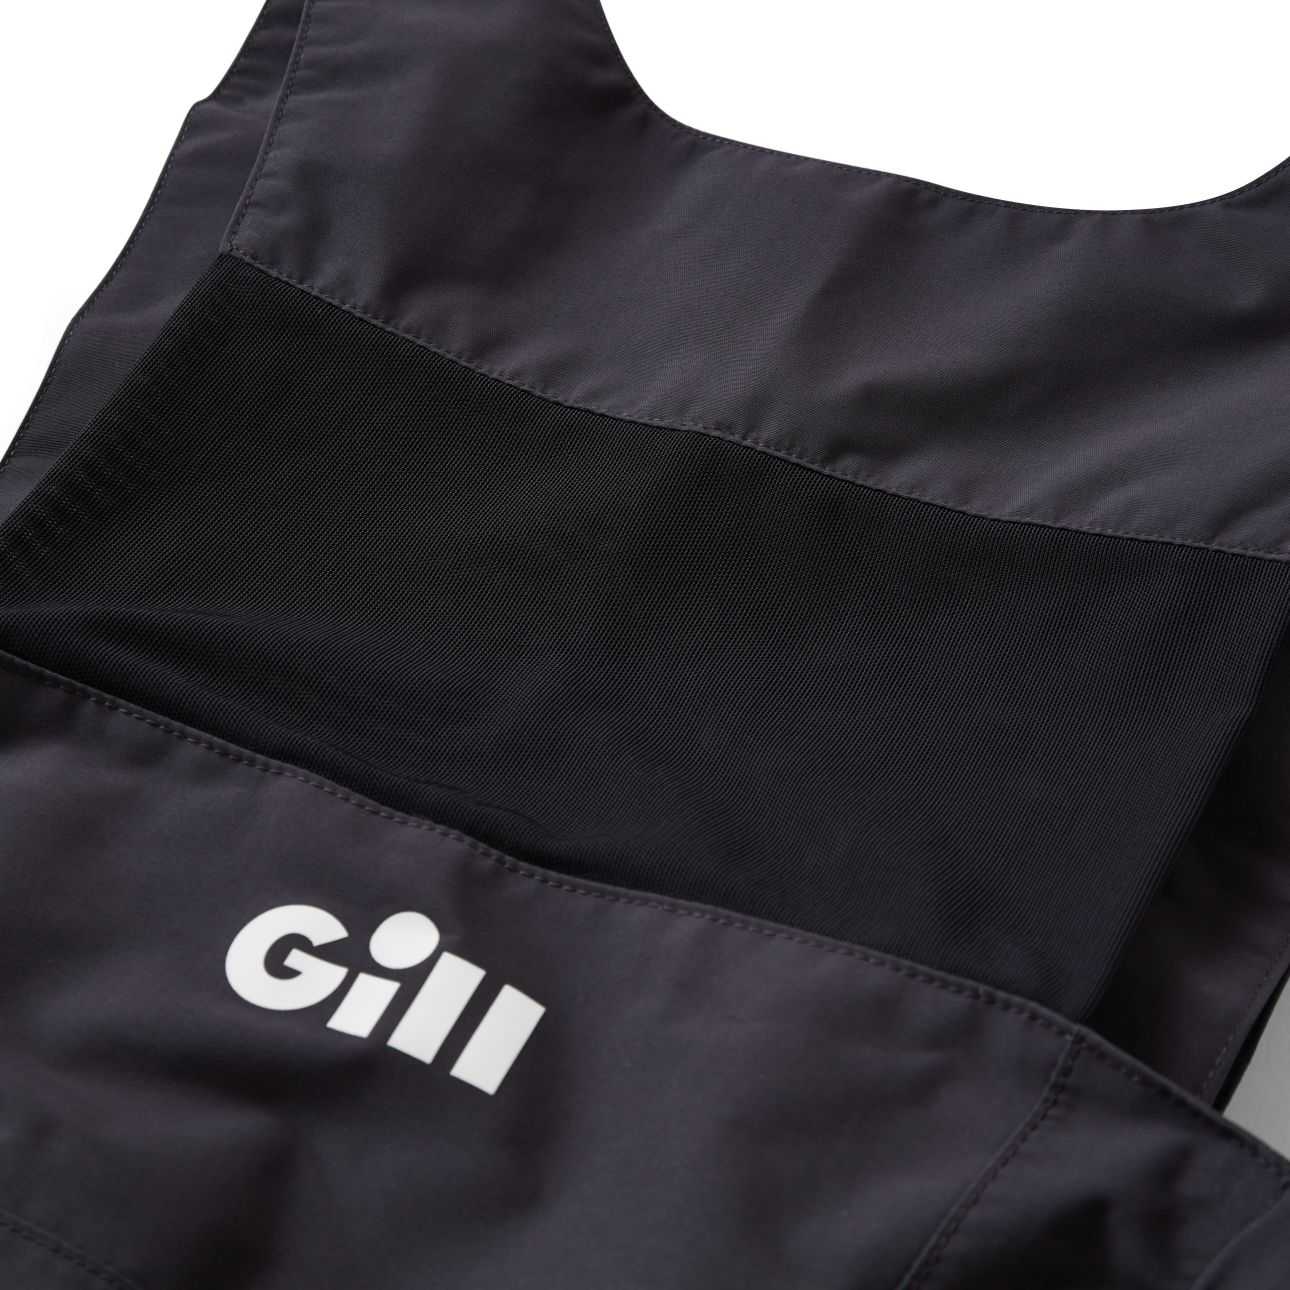 Gill - Offshore Trouser